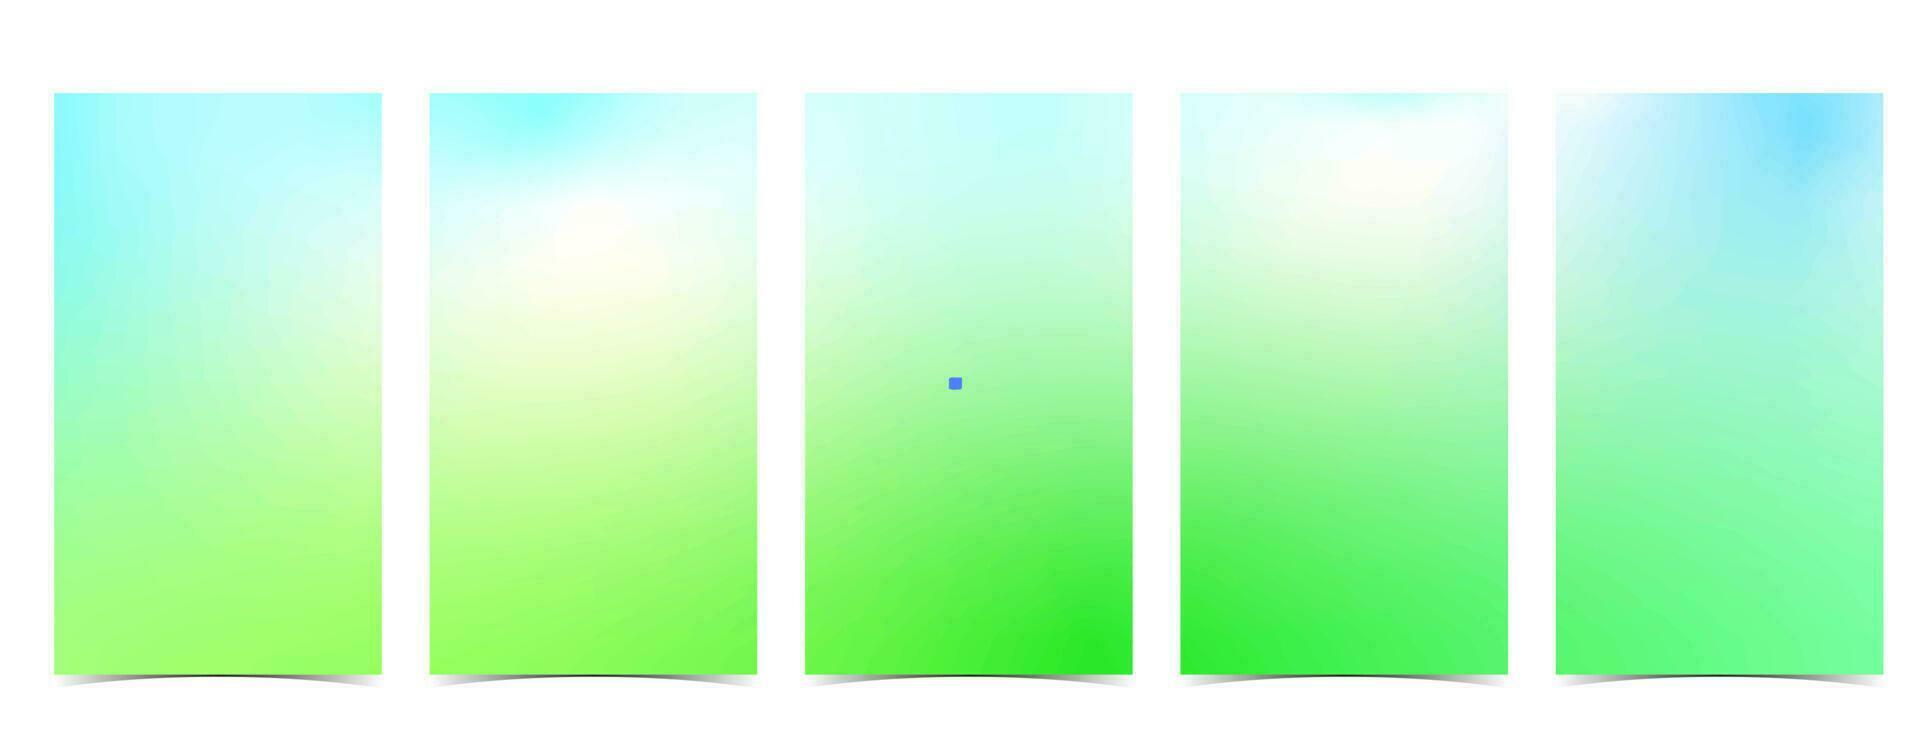 green gradient for social media background vector